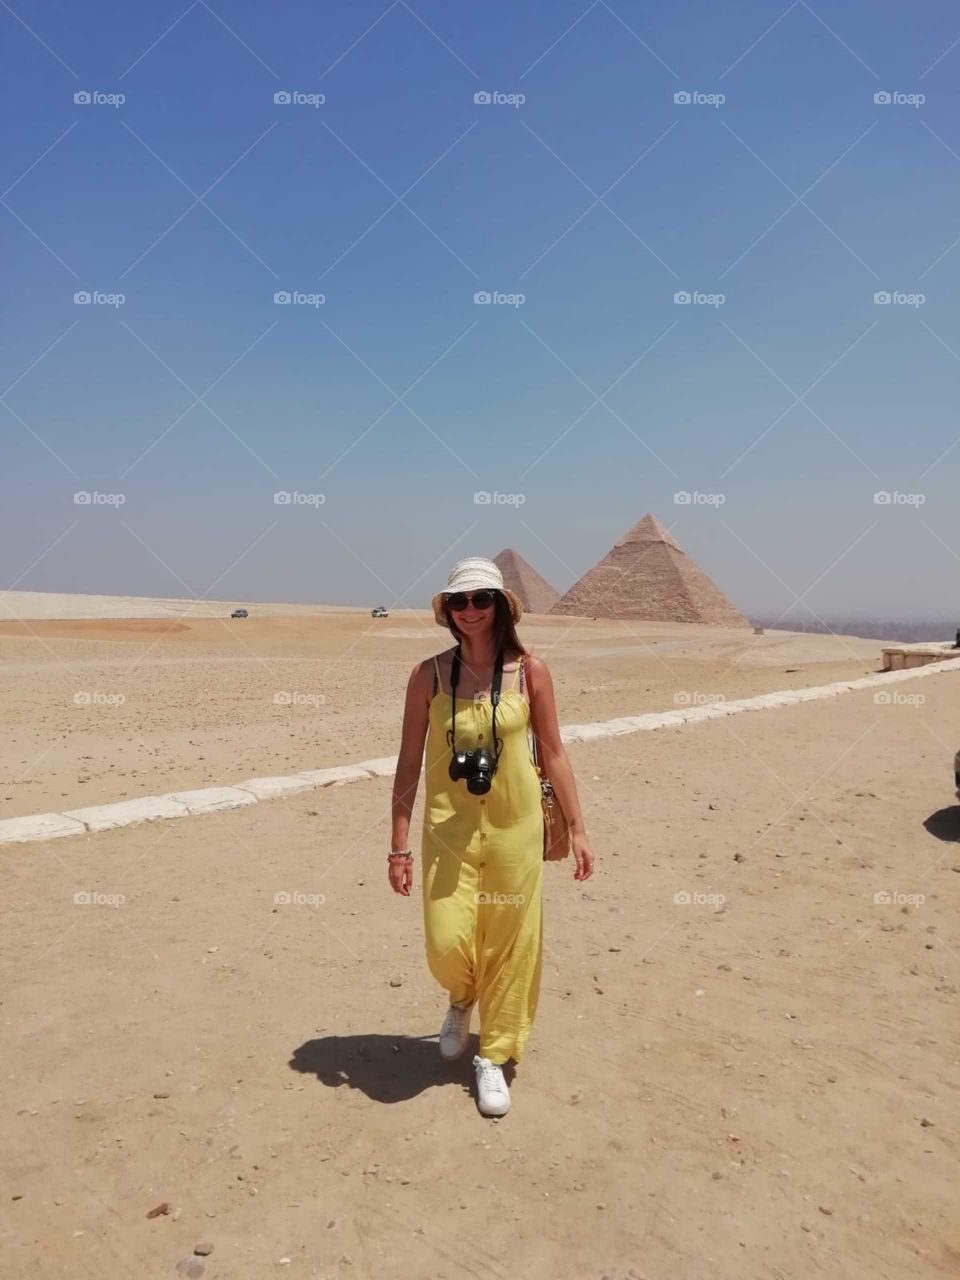 she's walking around the panorama view pyramids very attractive photo really very beautiful.